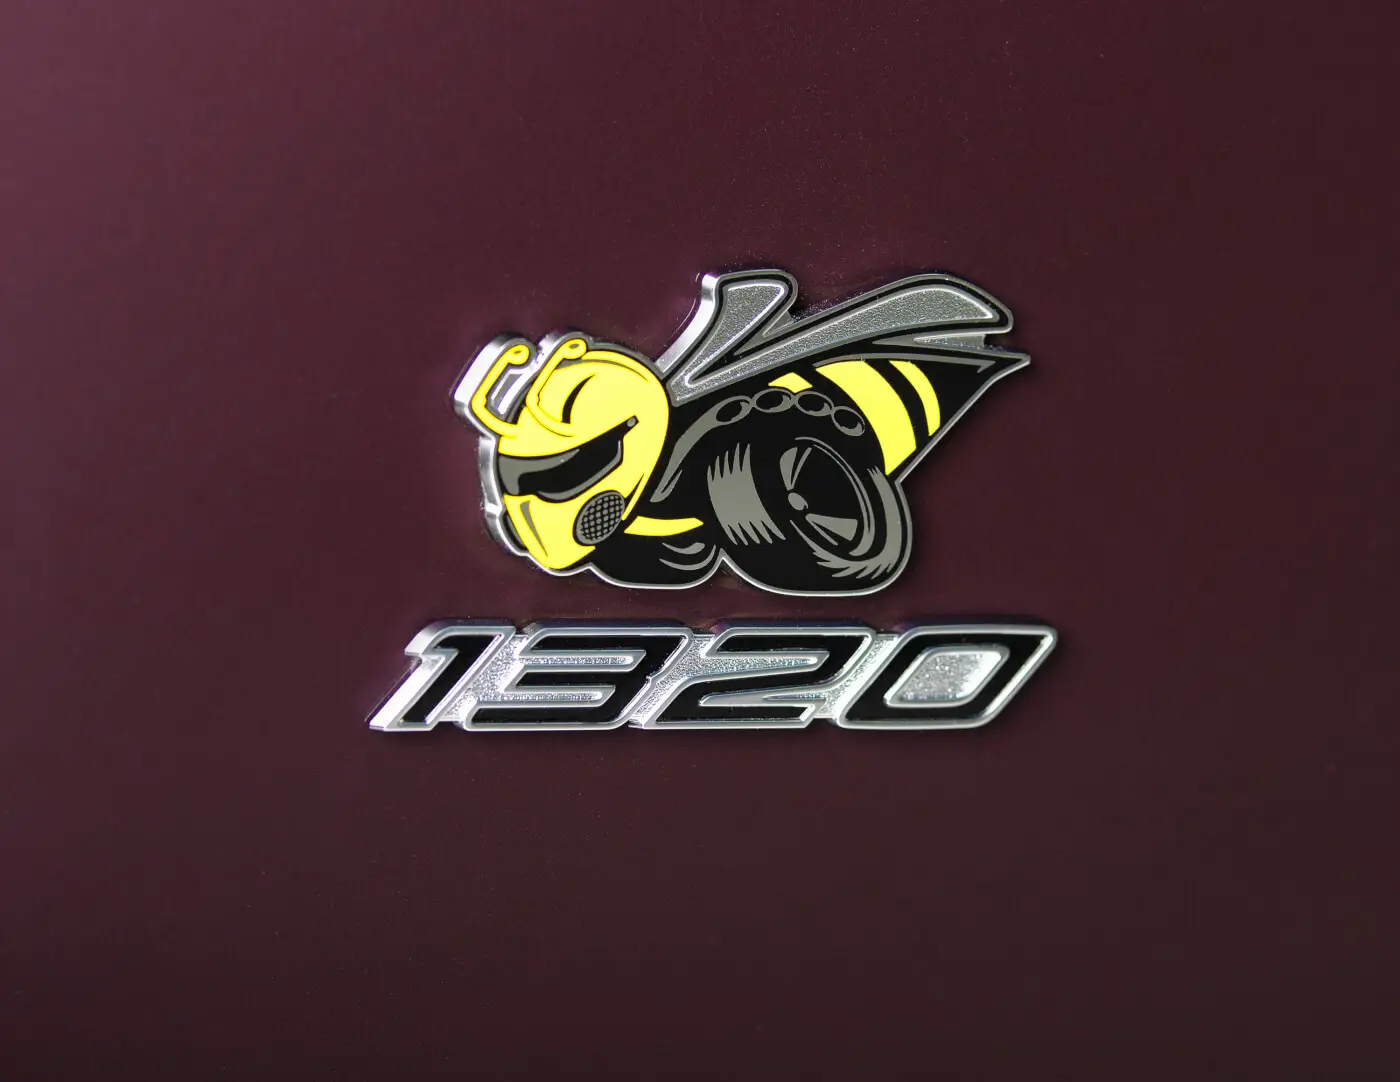 A new interpretation of the legendary Dodge Super Bee logo, the